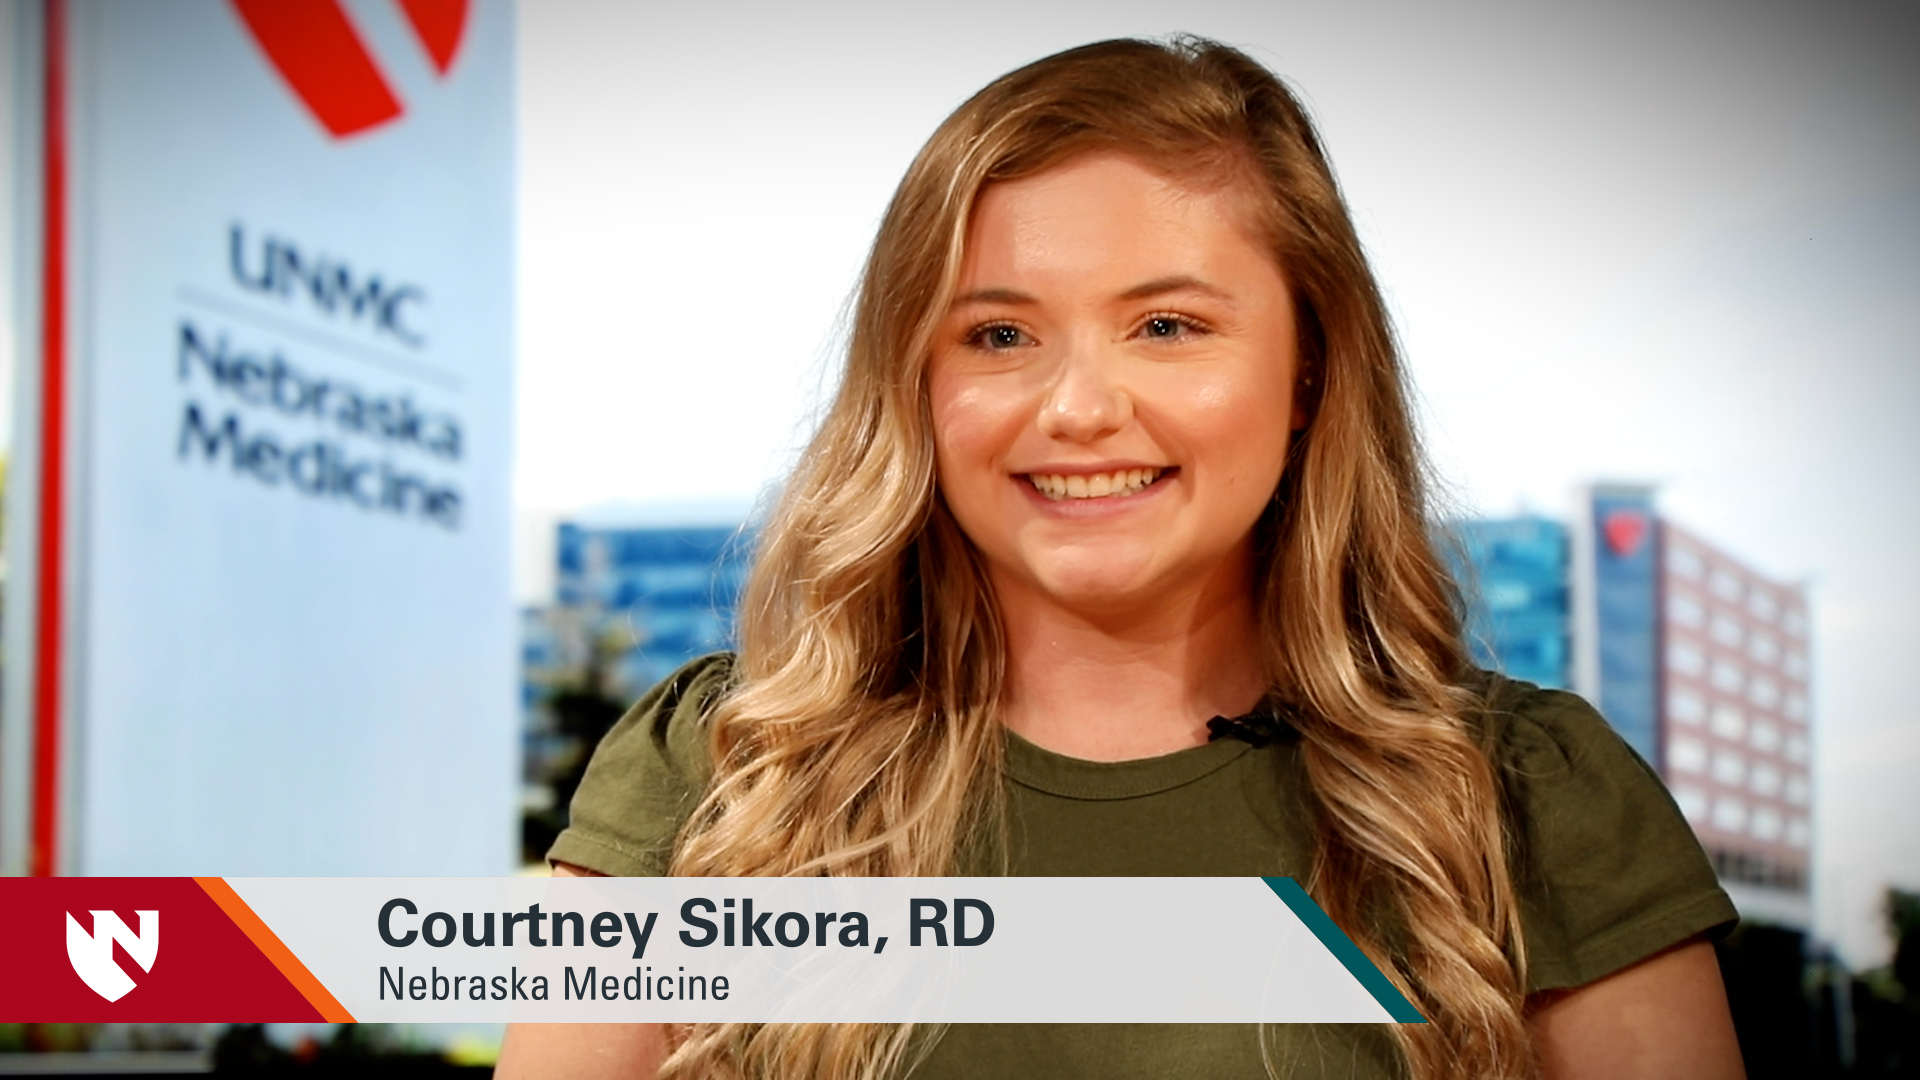 ASK UNMC! Courtney Sikora, RD, Nebraska Medicine